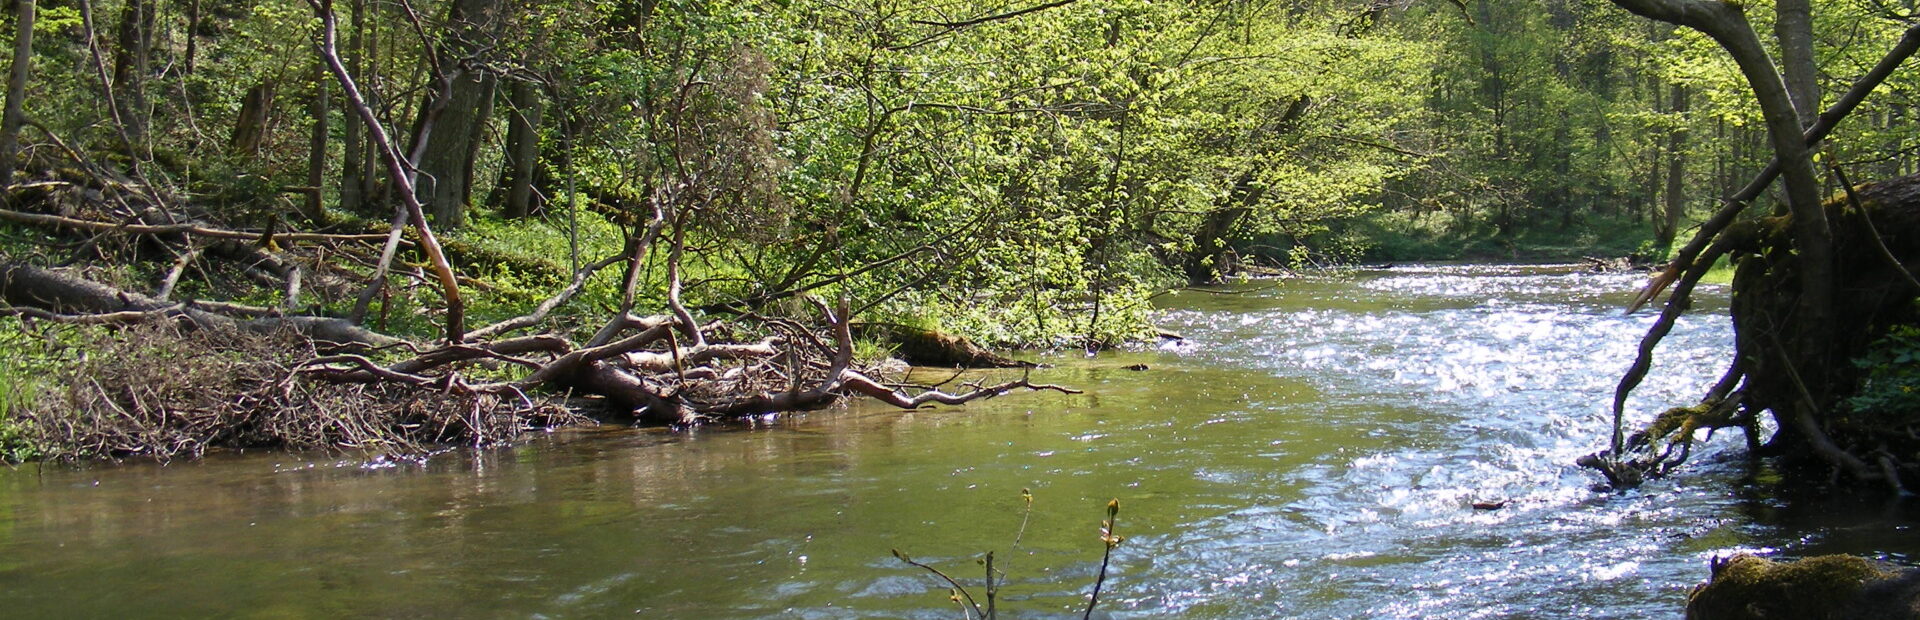 The Radunia river water trail